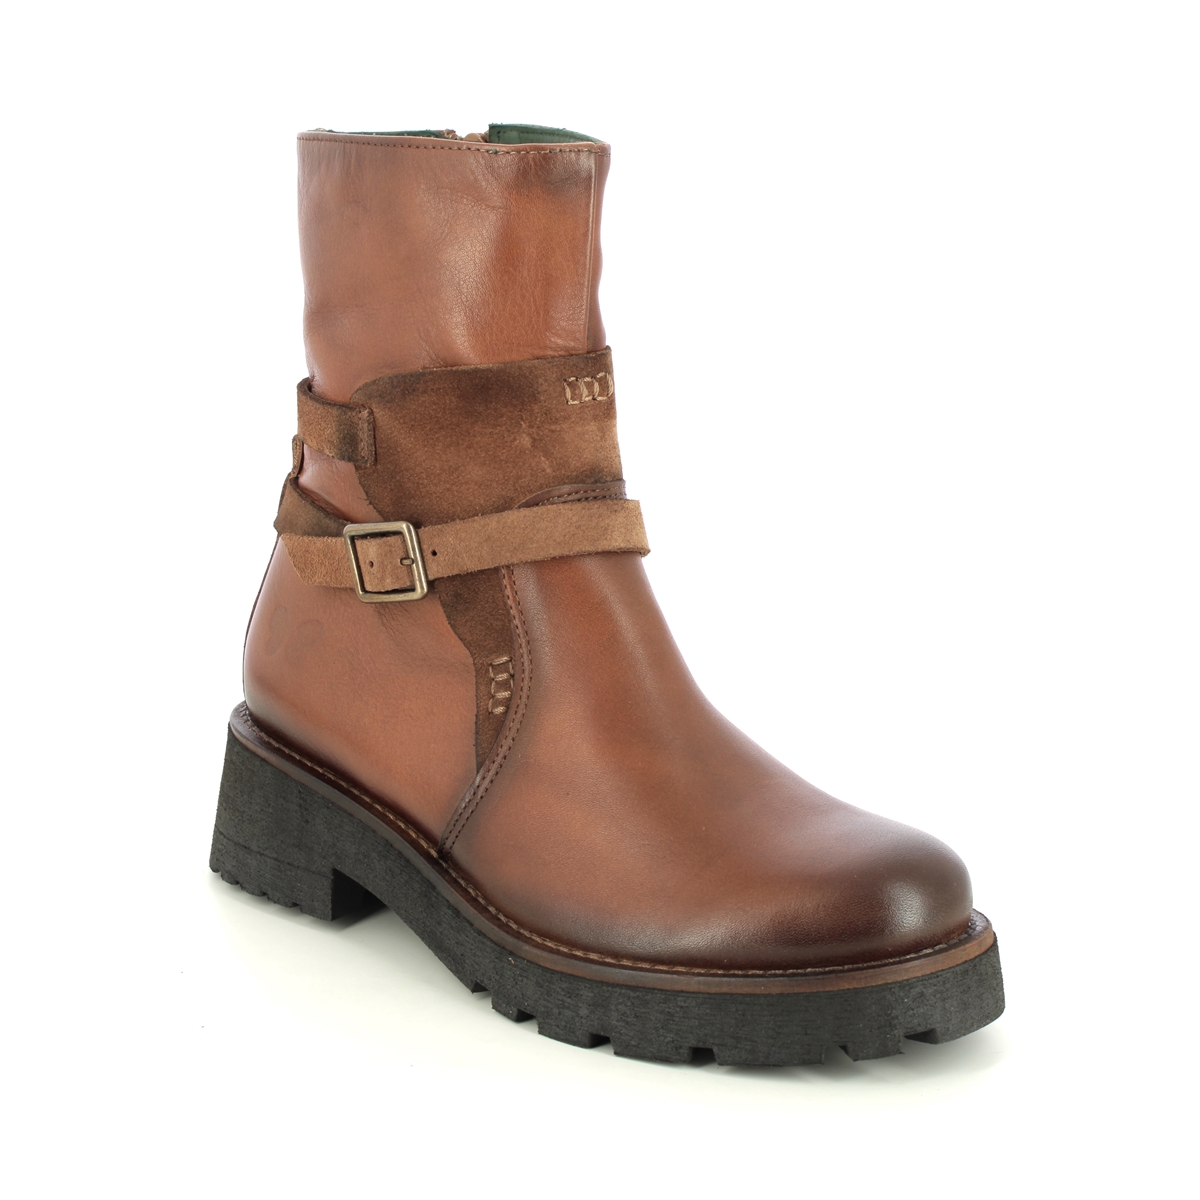 Felmini - Nadir  Strap (Tan Leather ) D550-11 In Size 41 In Plain Tan Leather